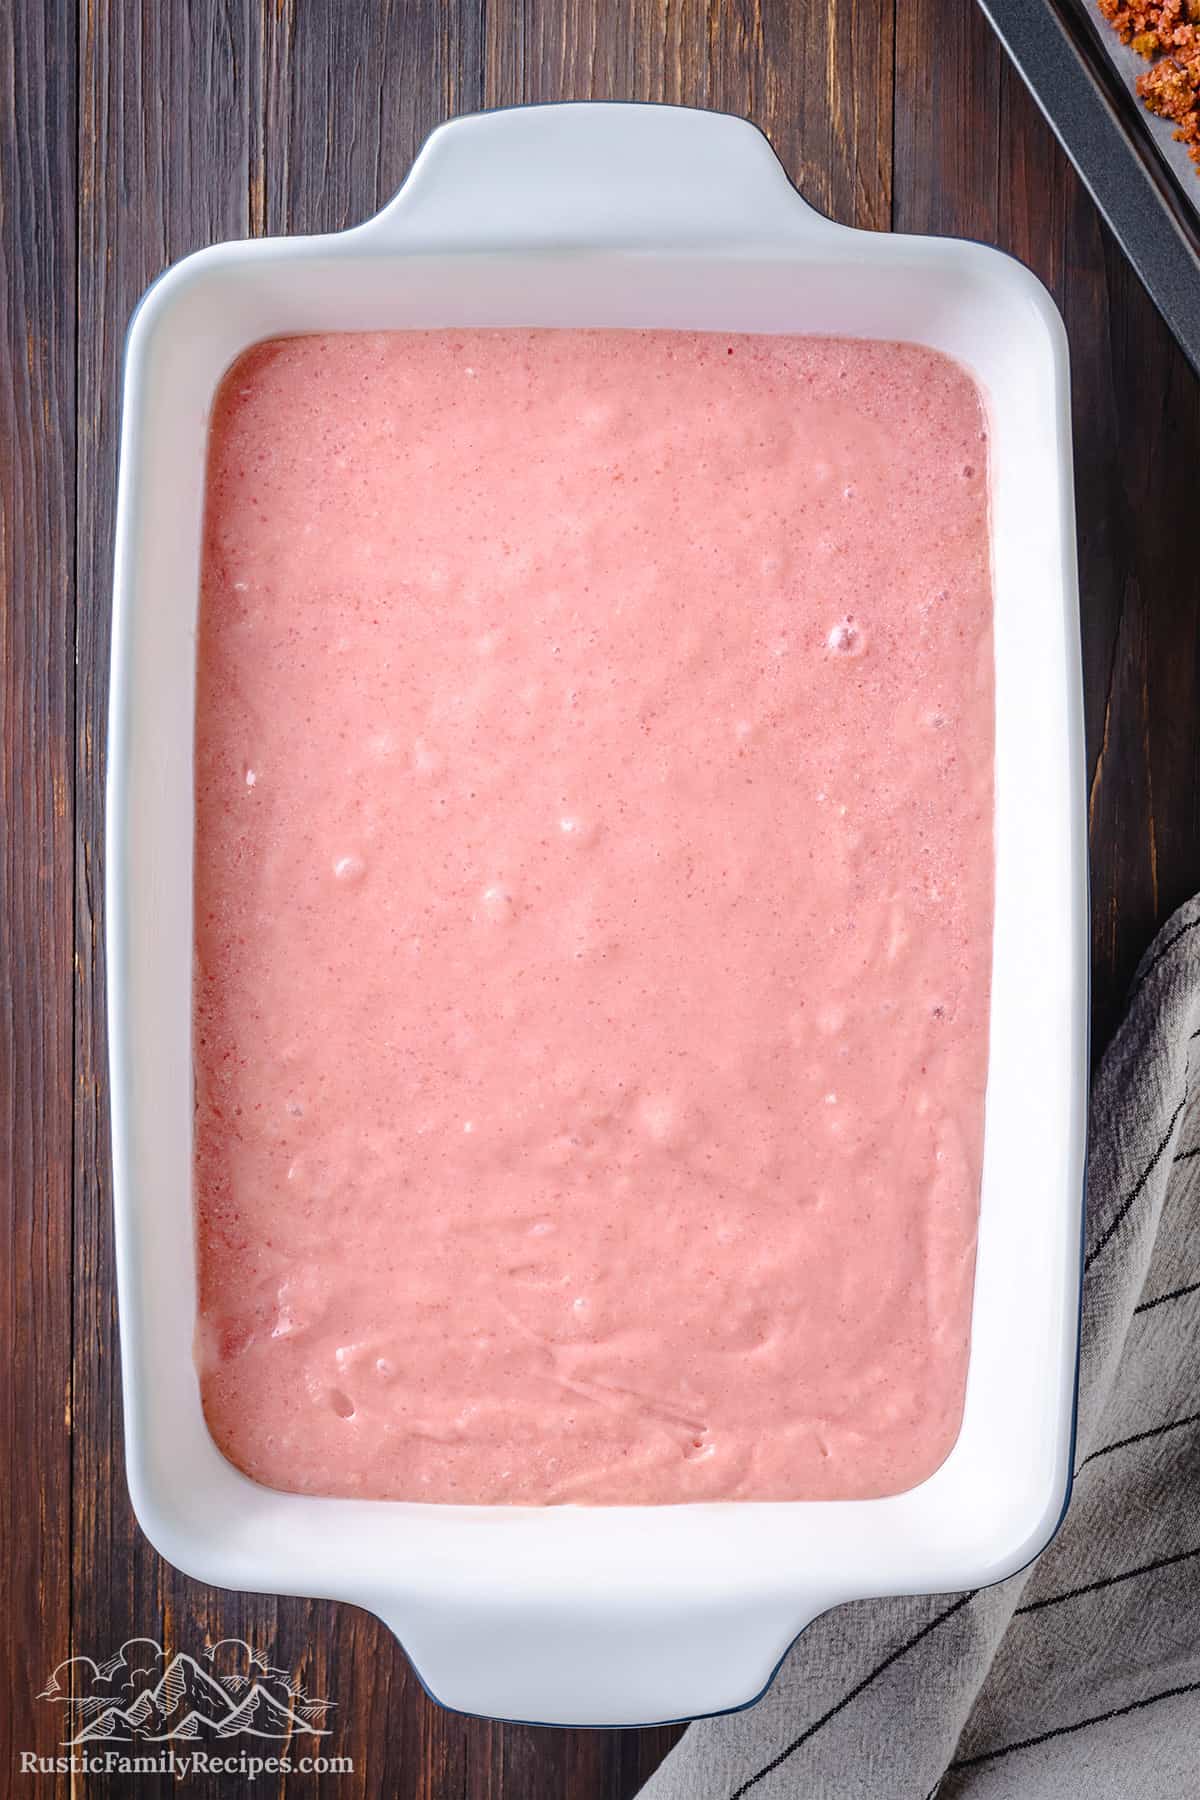 Unbaked strawberry cake batter